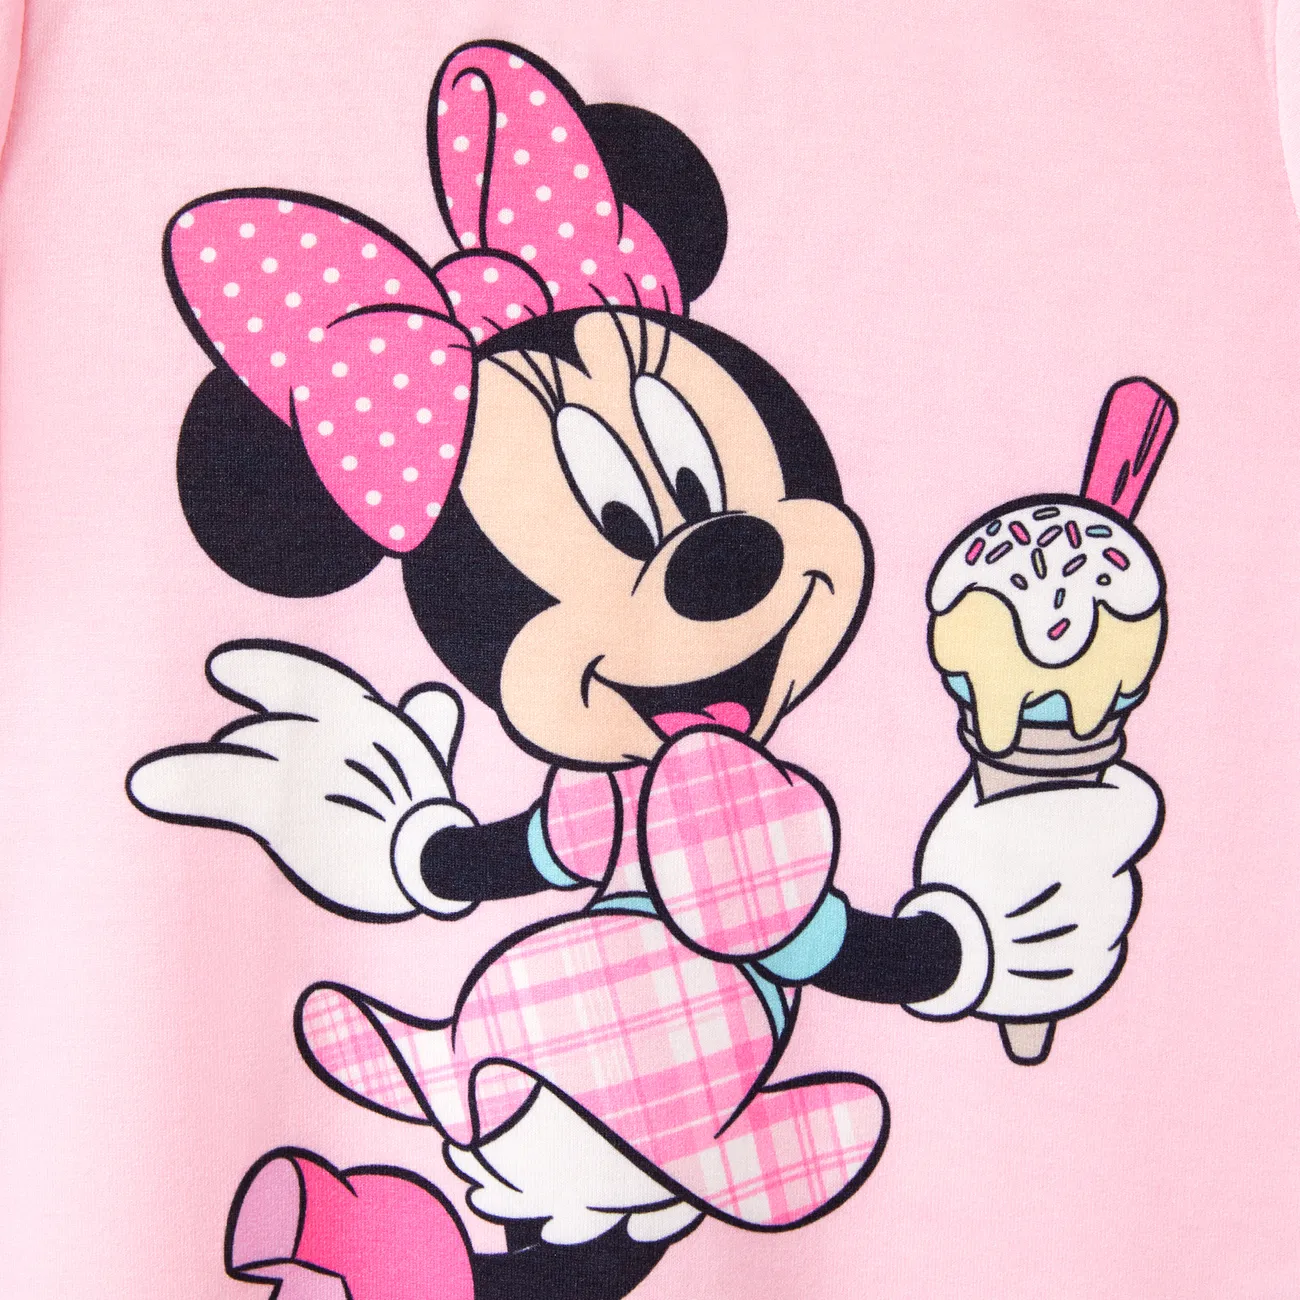 Disney Mickey and Friends Chica Mangas con volantes Dulce Camiseta Rosado big image 1